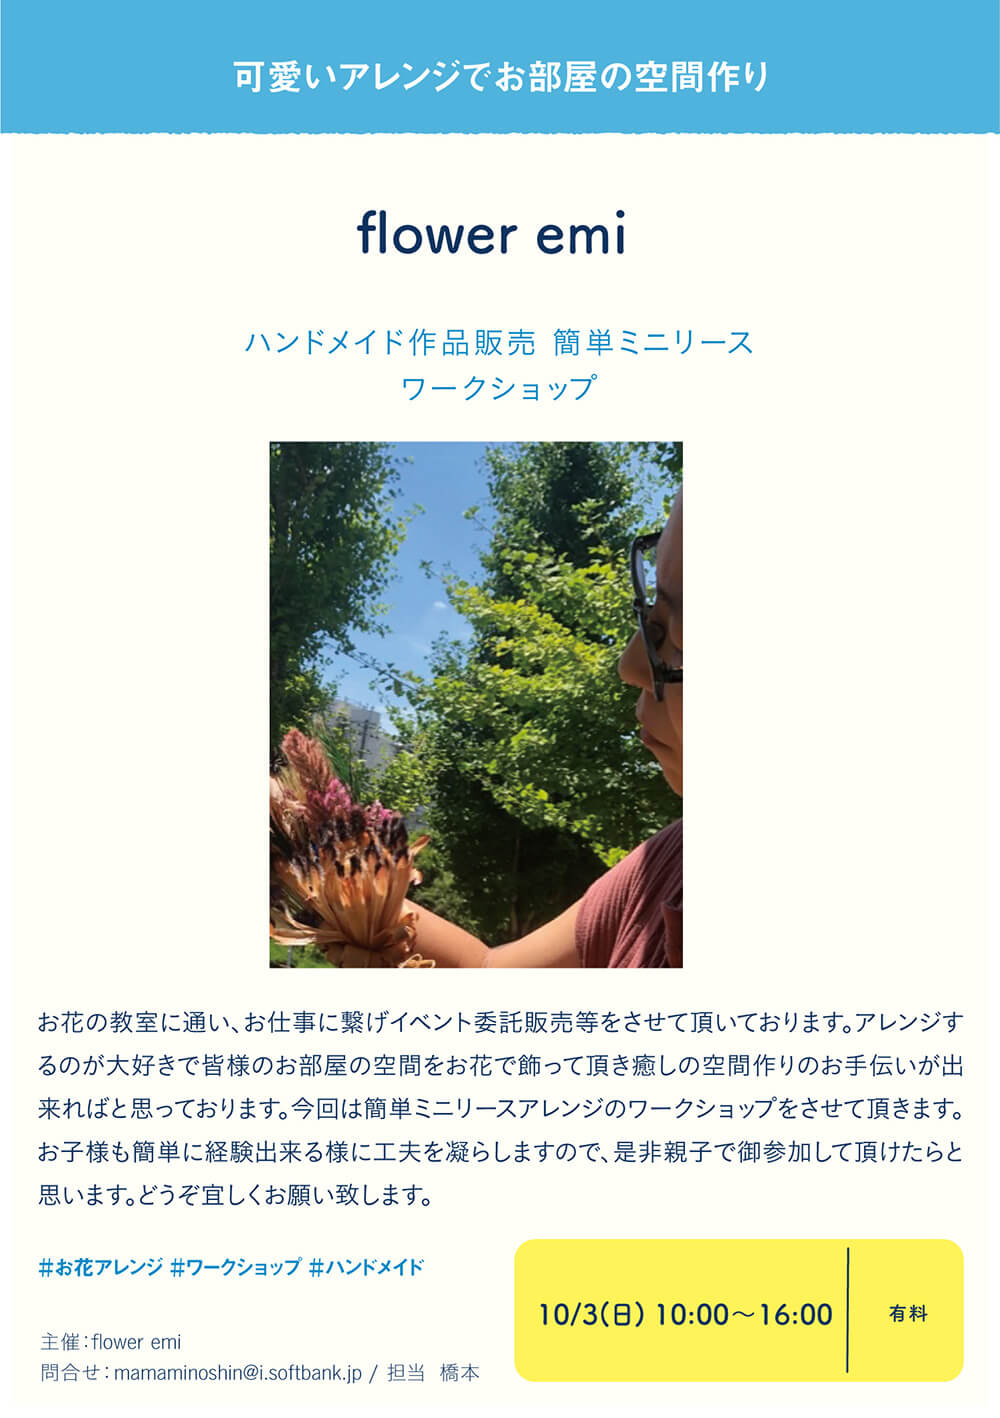 flower emi